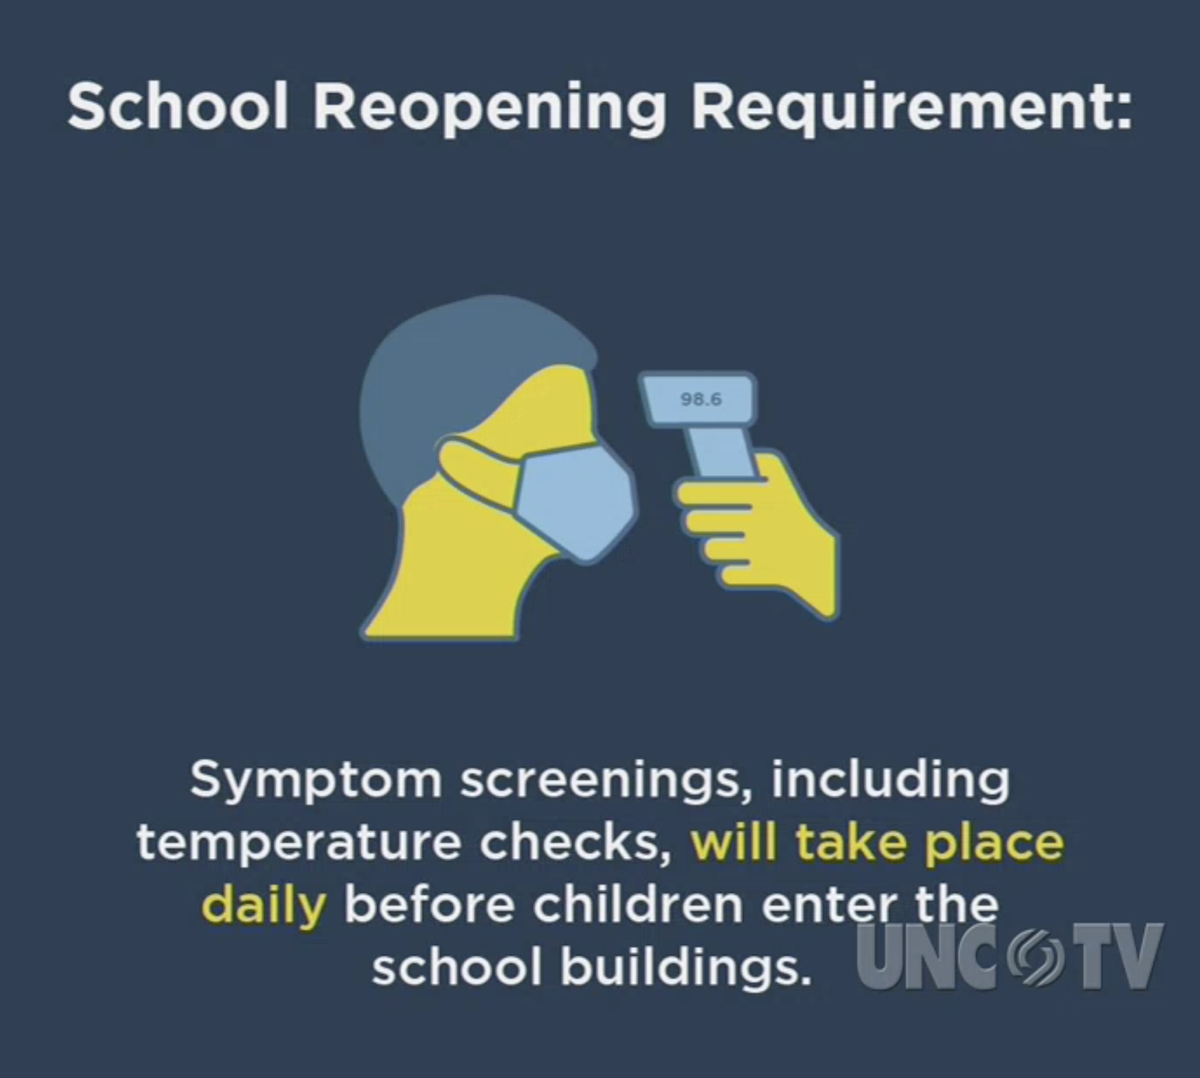 + All children will be required to undergo symptom checks